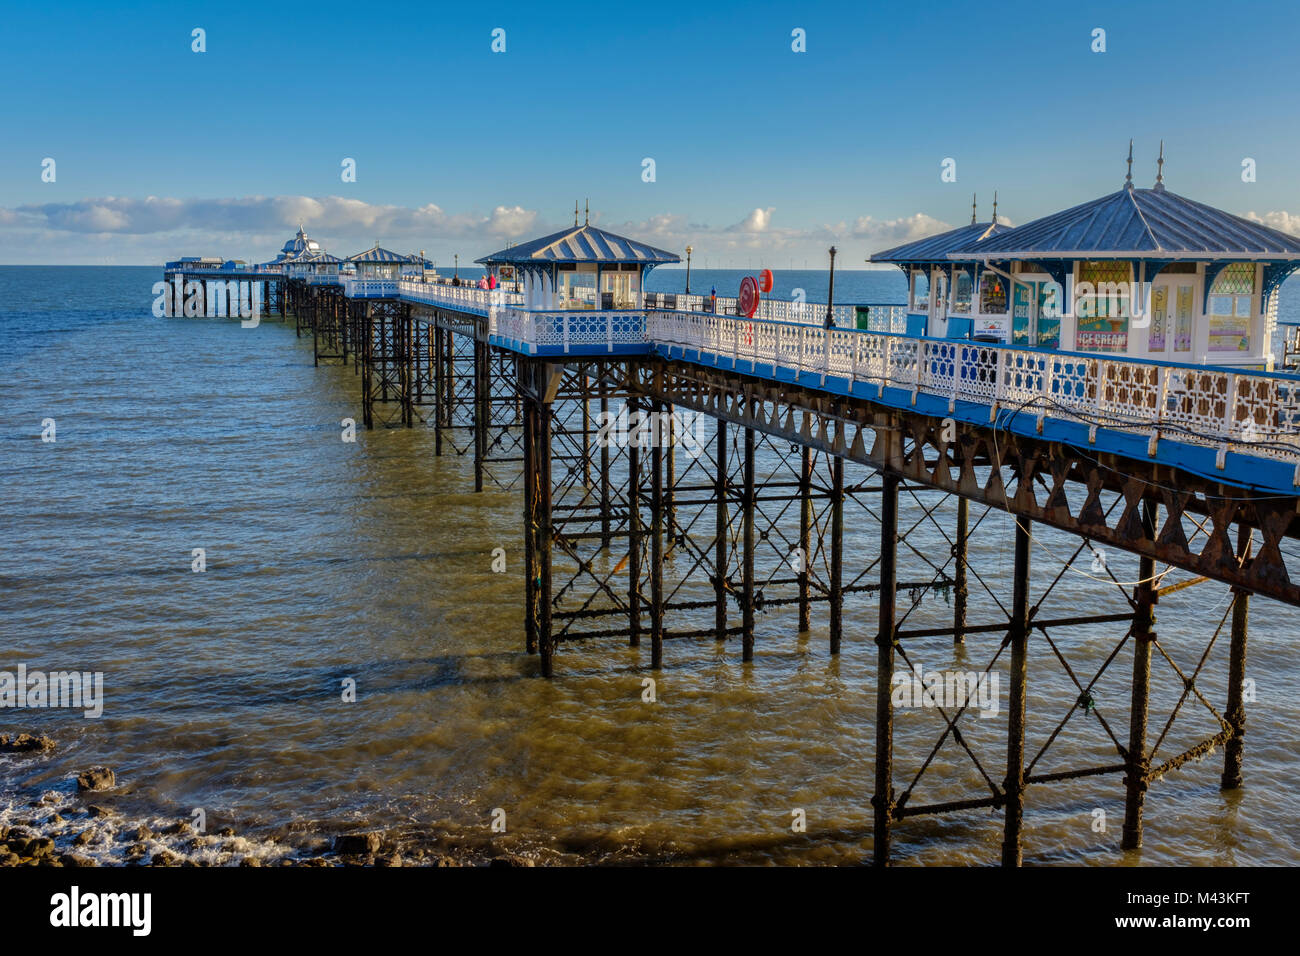 Am Pier in Llandudno, North Wales, UK. Foto: Brian Hickey/Alamy Stockfoto